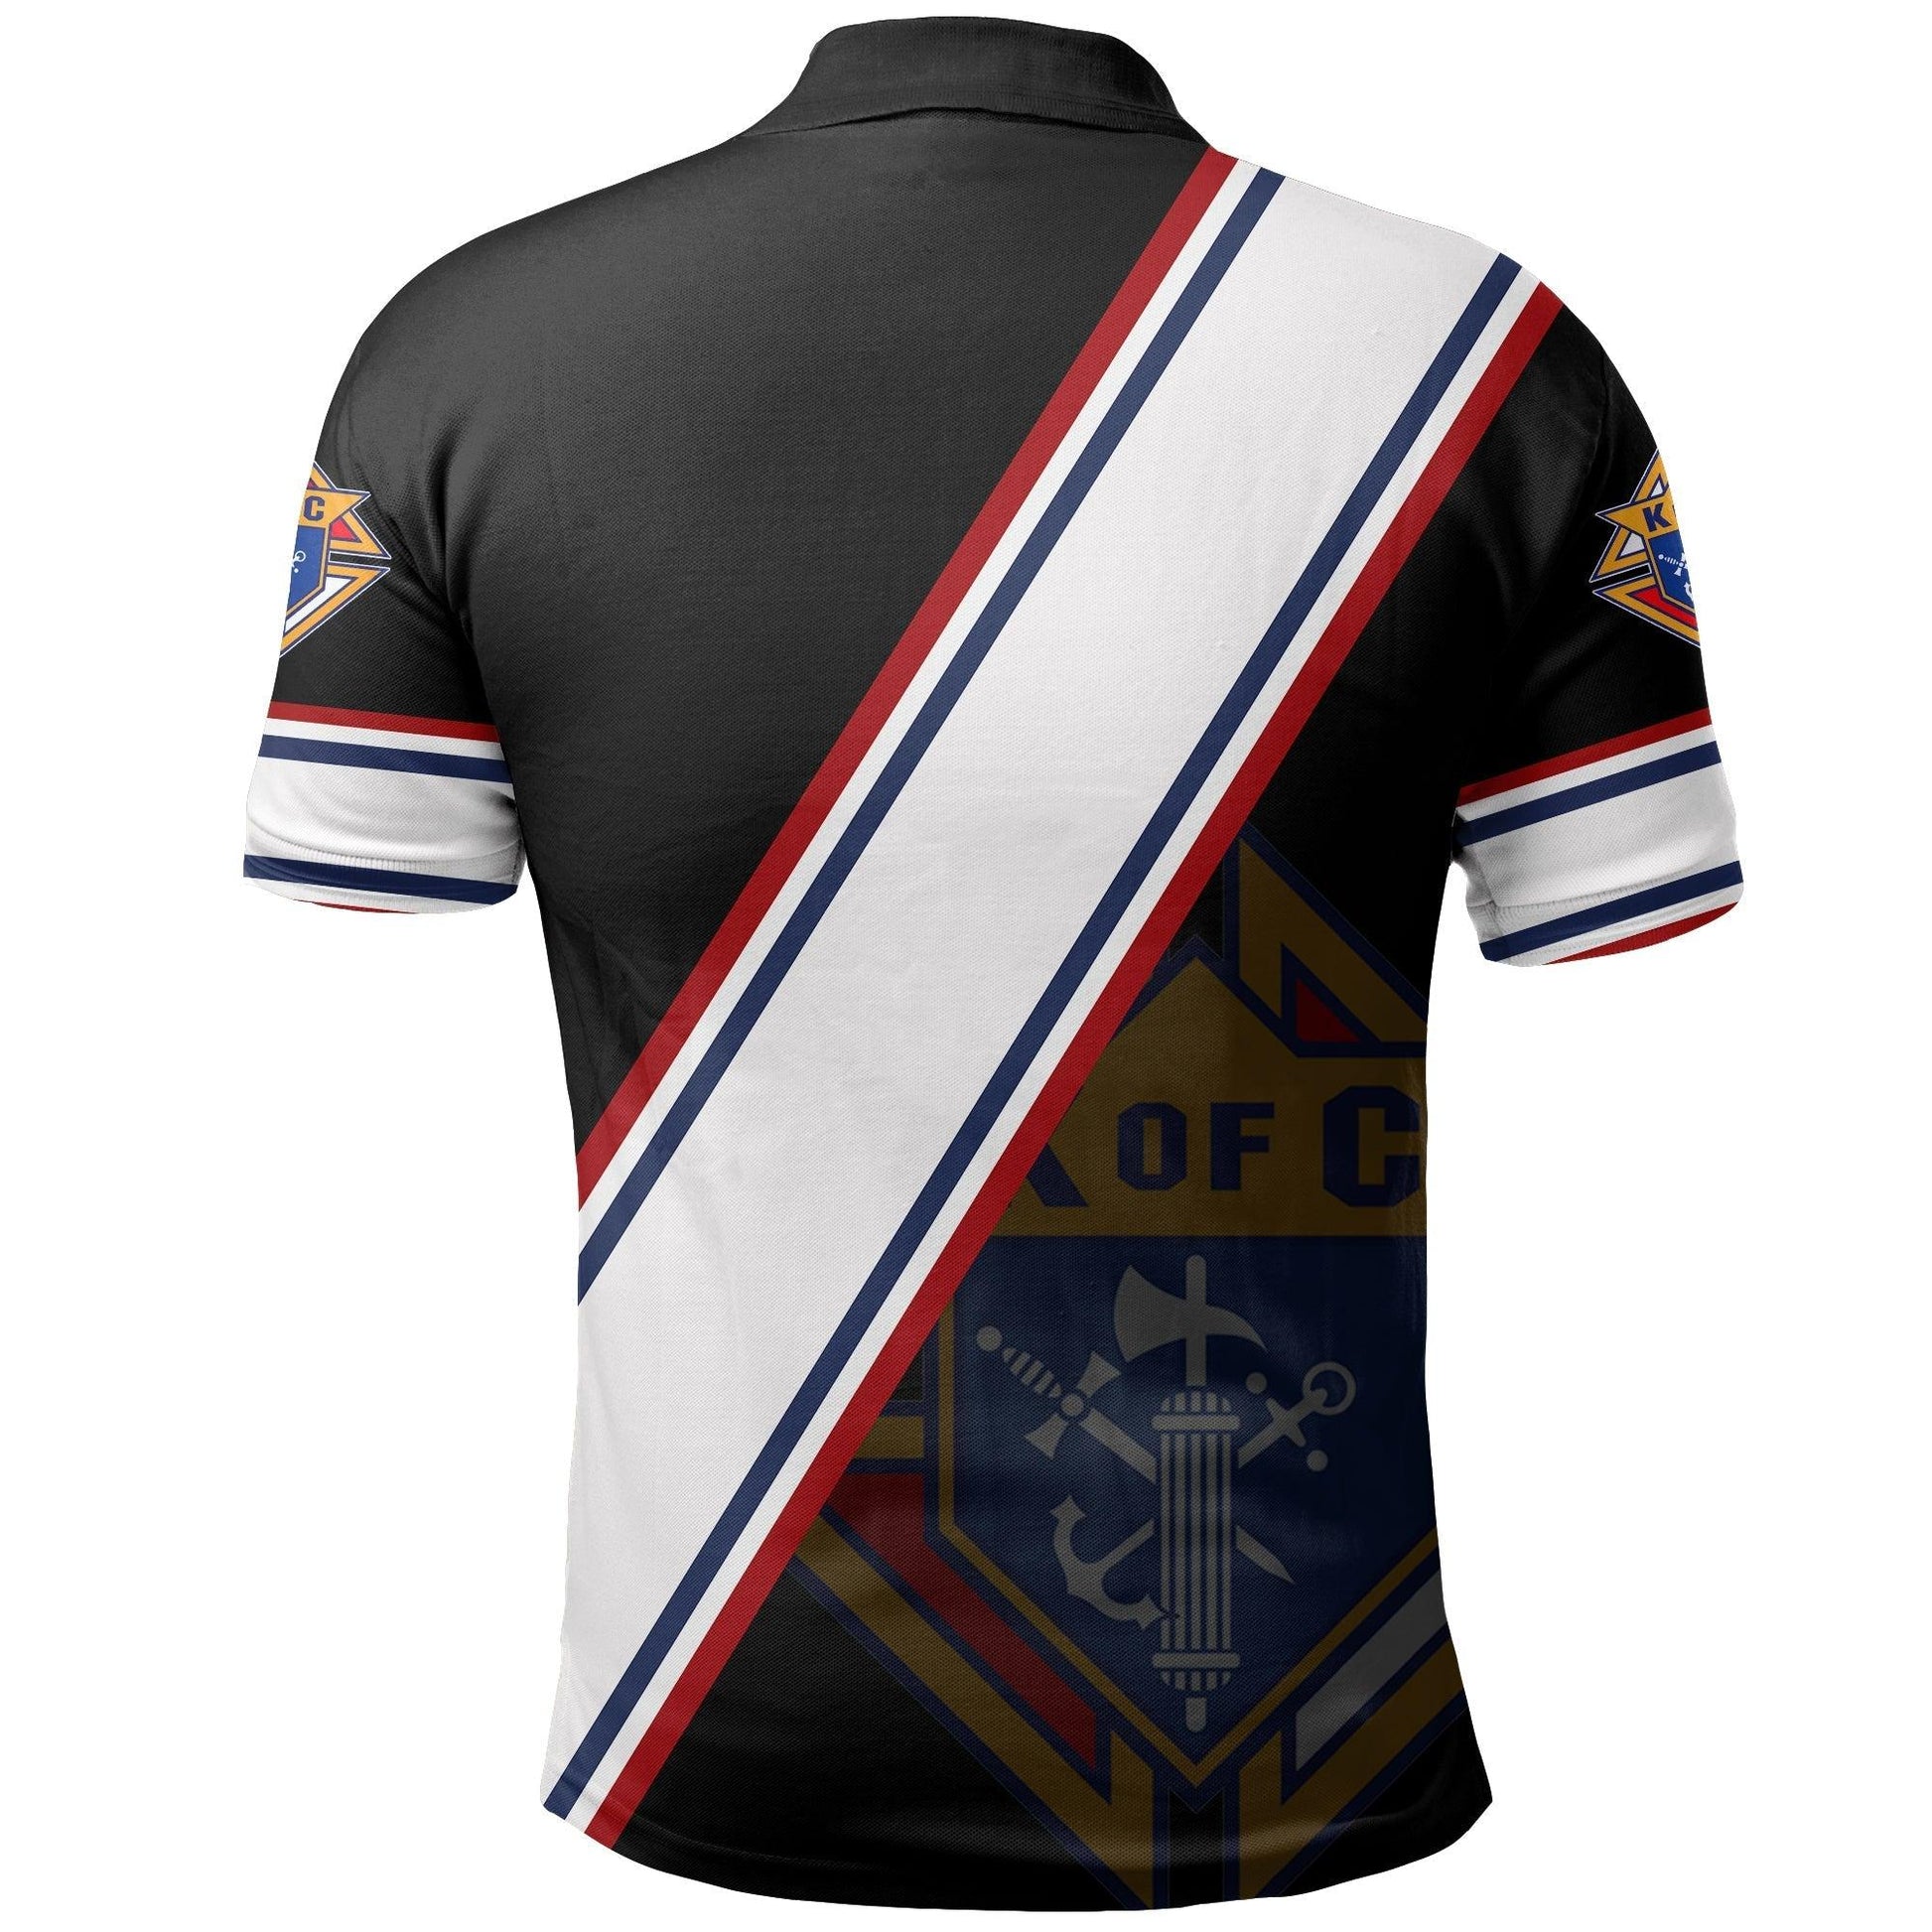 Simonandcool (Custom Personalised) Knights of Columbus Polo Shirt The Catholic Church Style LT6